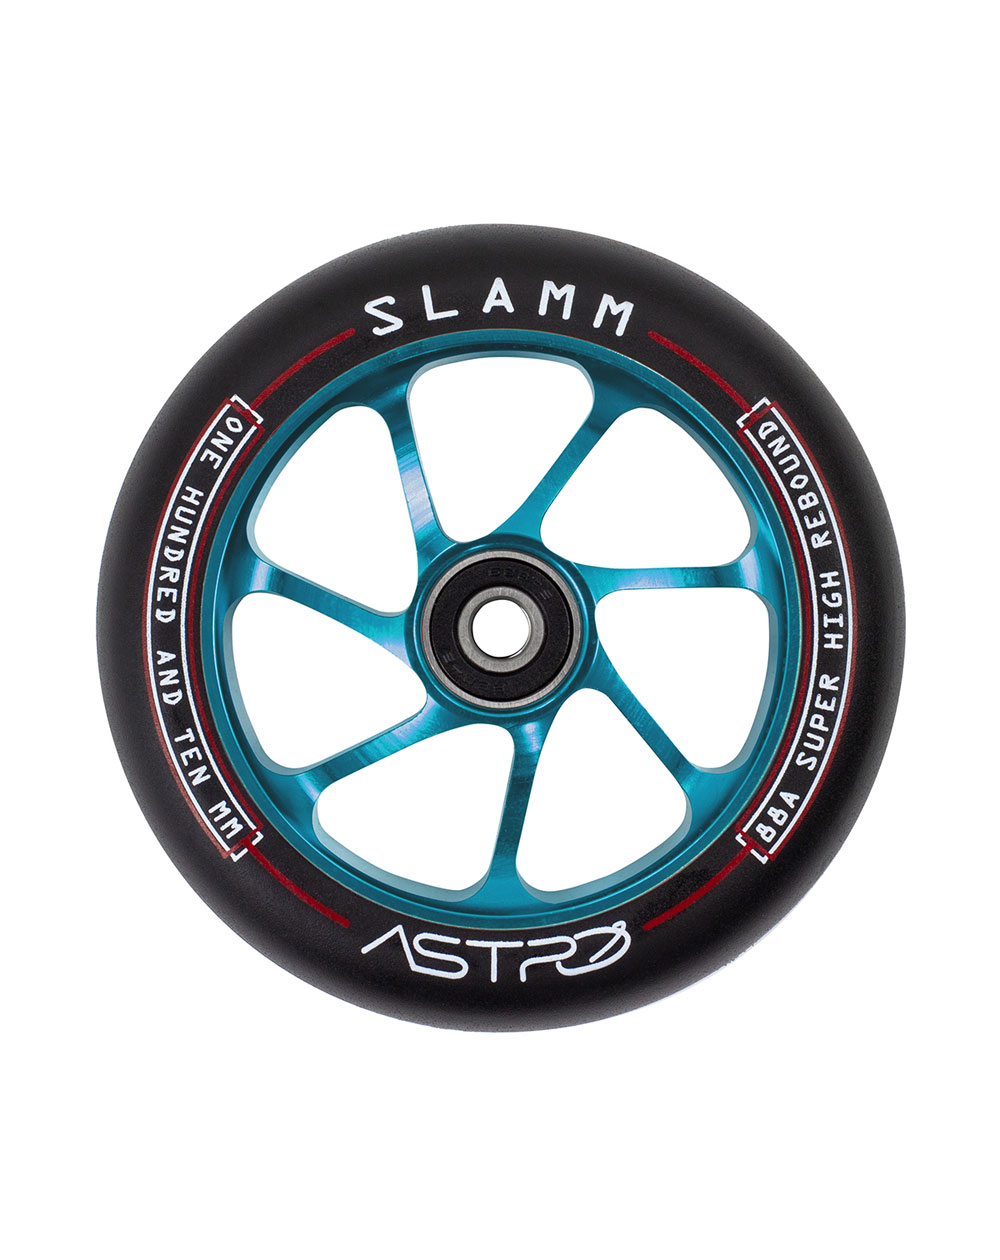 Slamm Scooters Ruota Monopattino Astro 110mm Blue